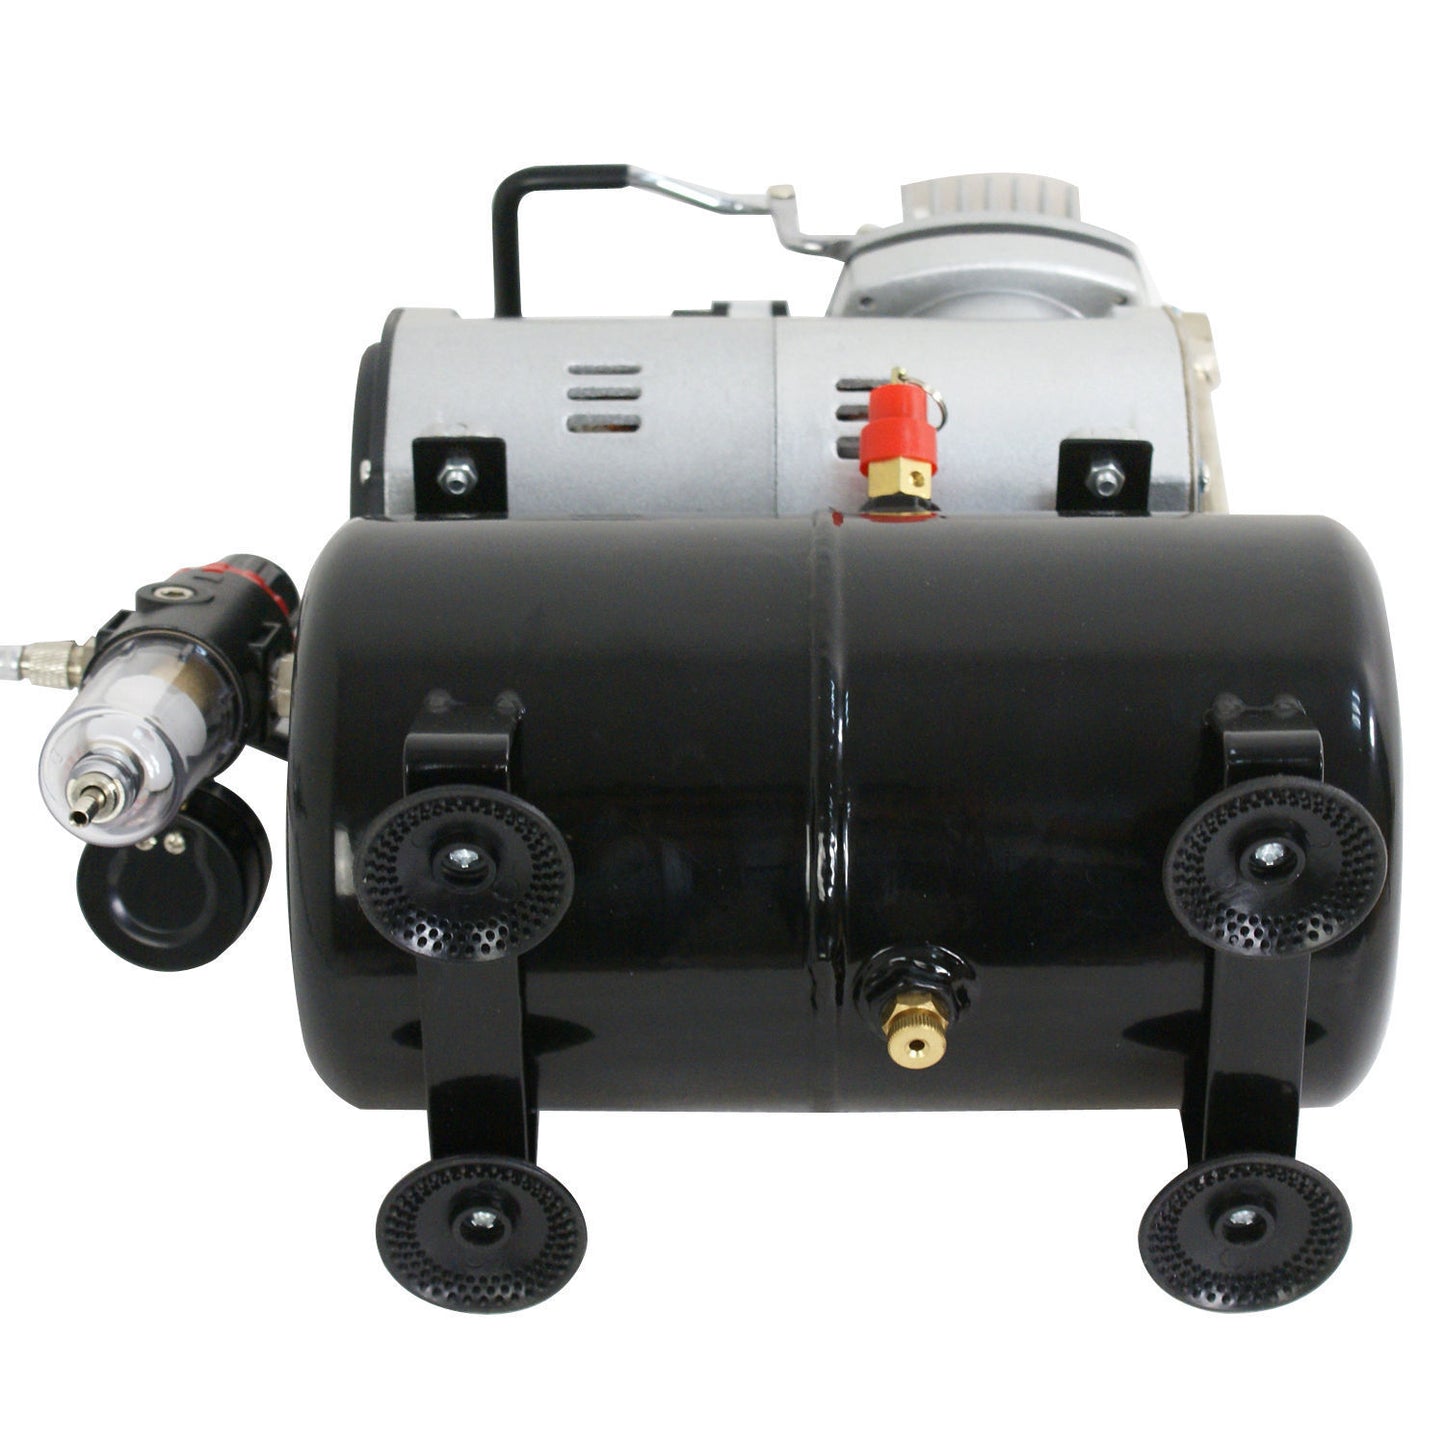 Powerful Airbrush Pro High Performance Compressor w/3L Air Tank Maintenance Free